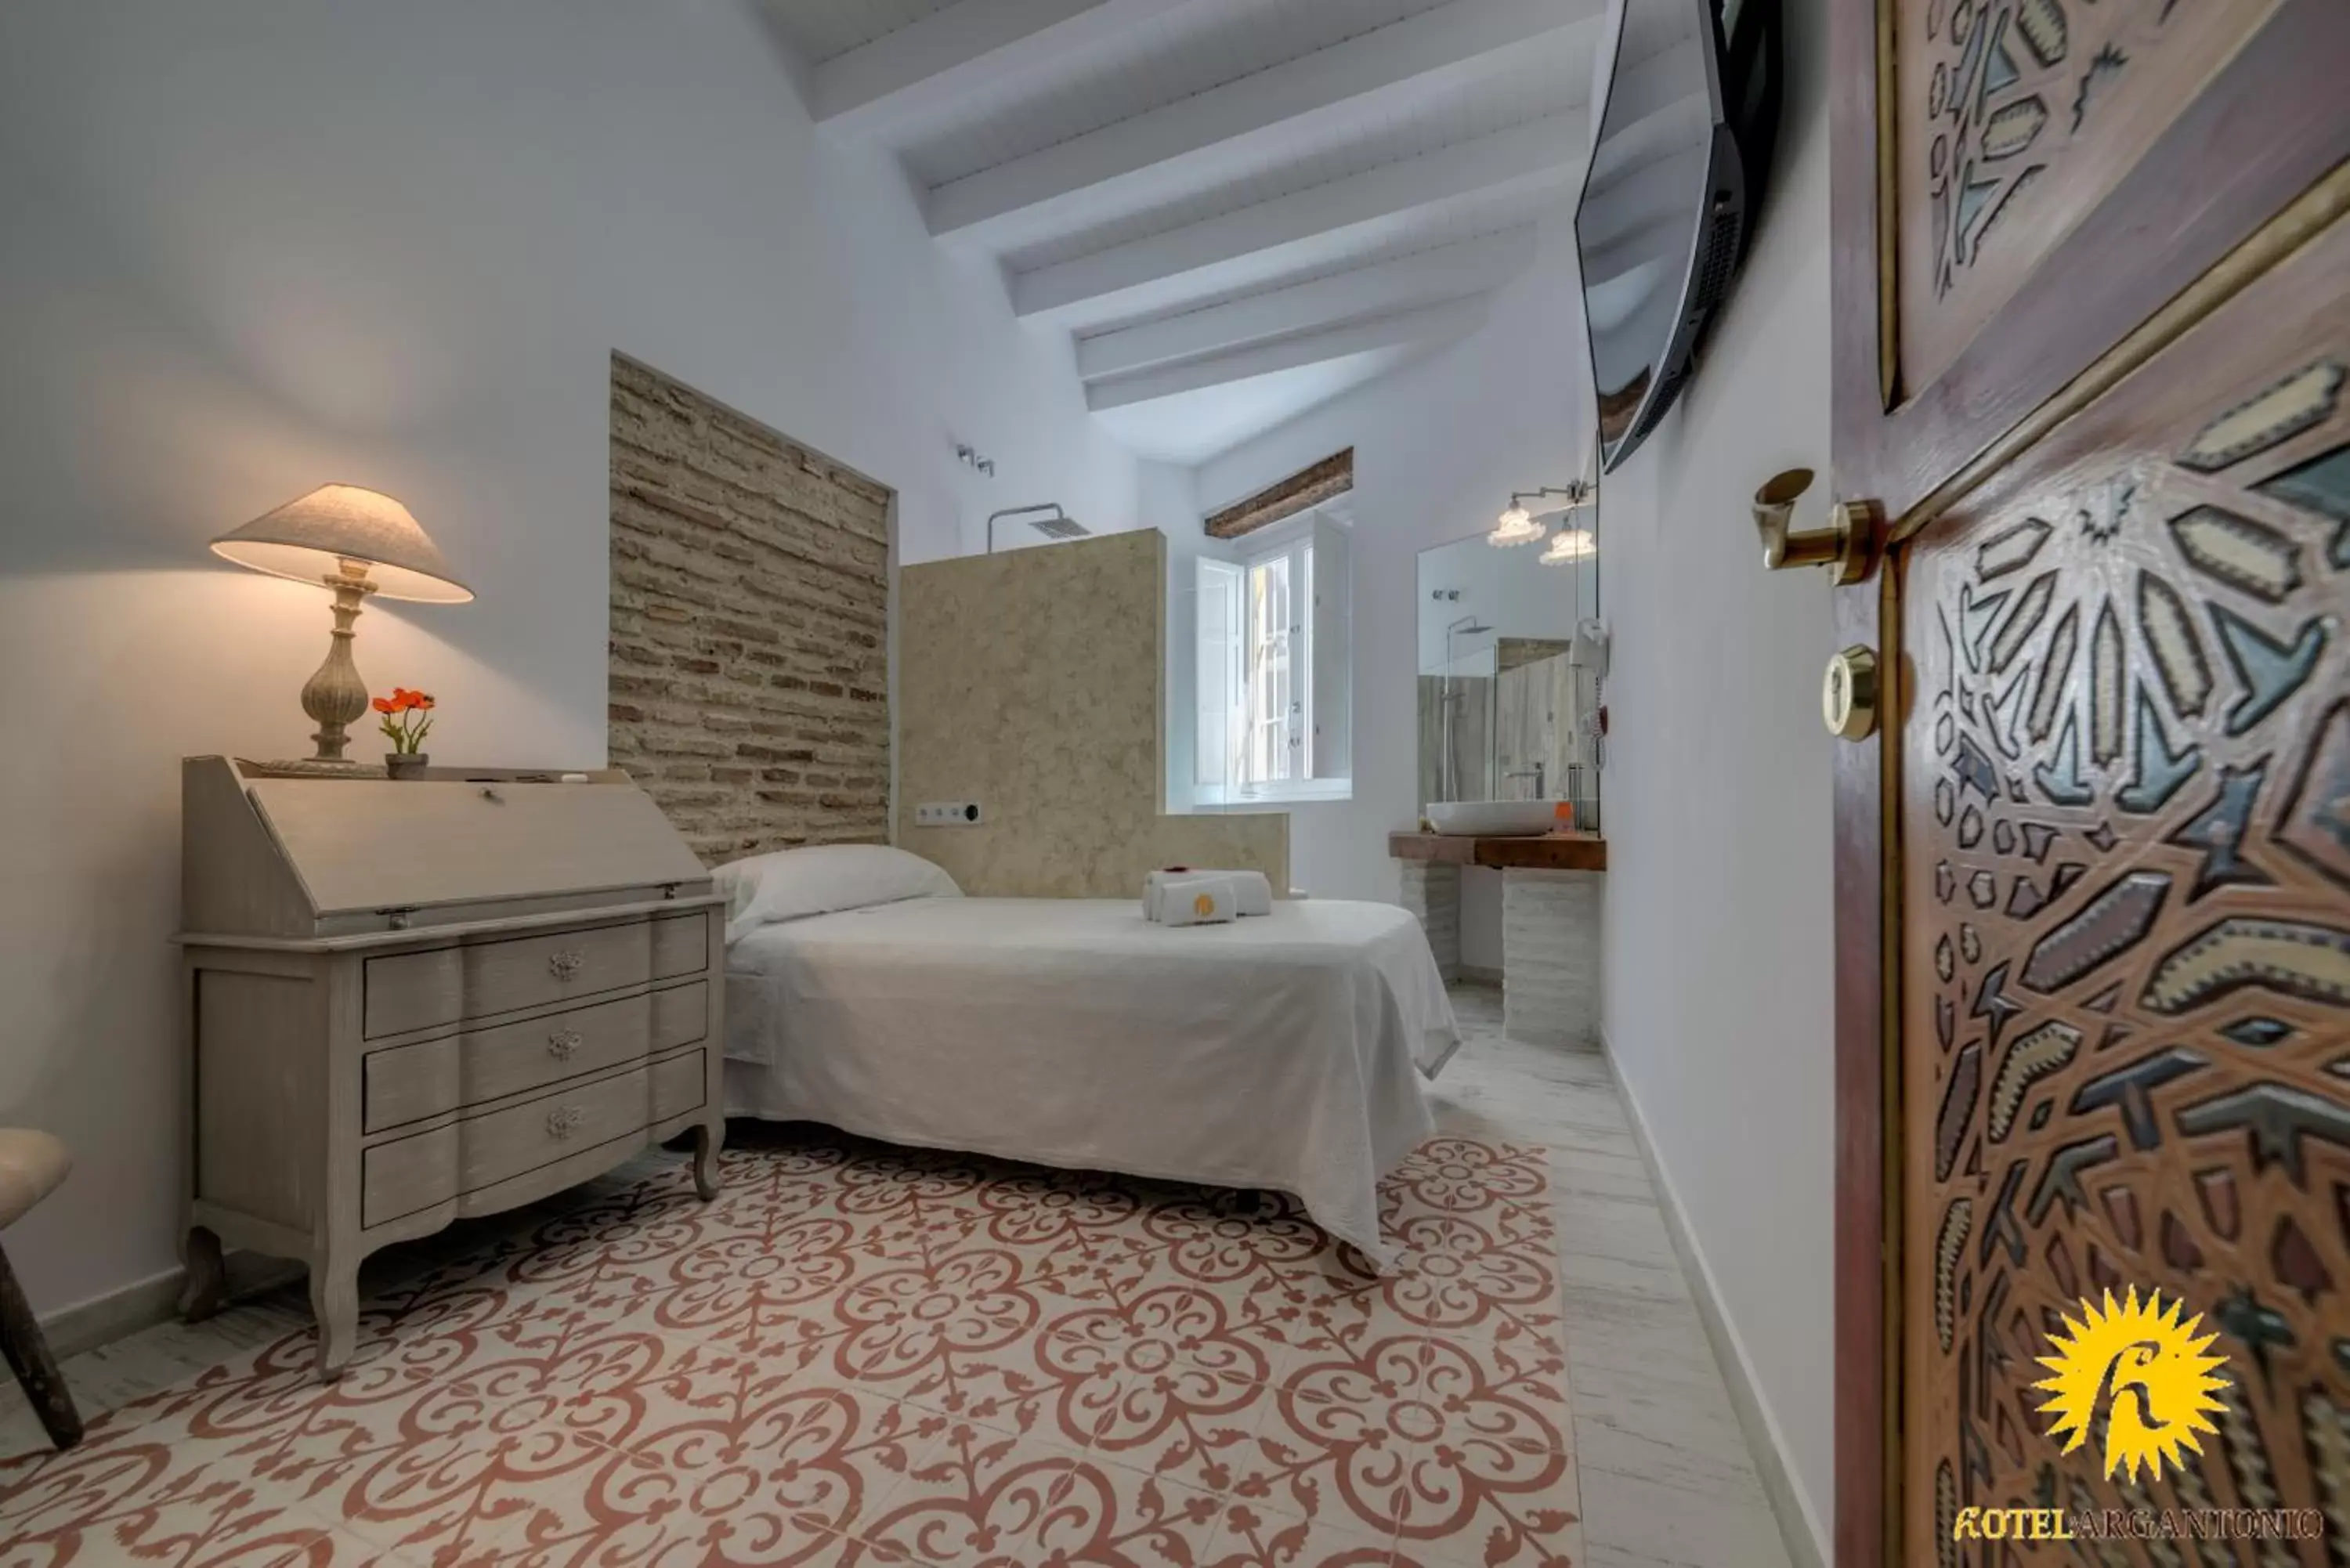 Bed, Room Photo in Hotel Argantonio